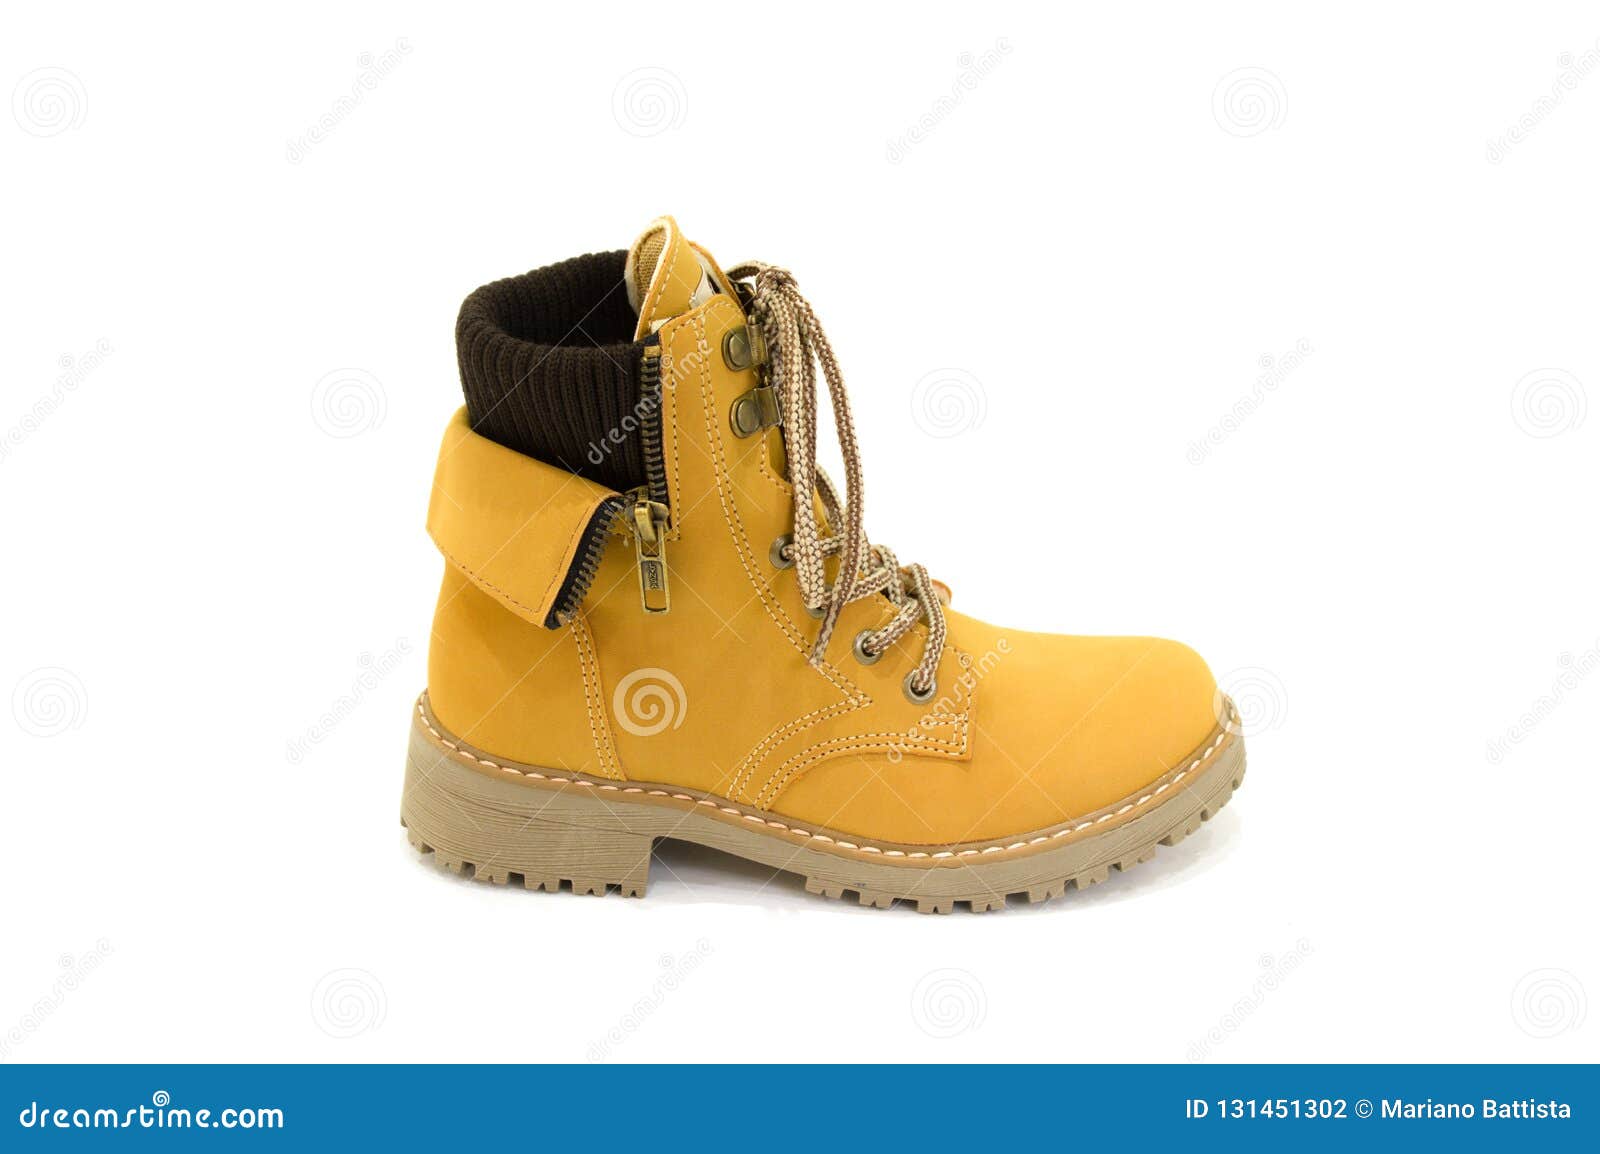 high shoe kicker boot brown